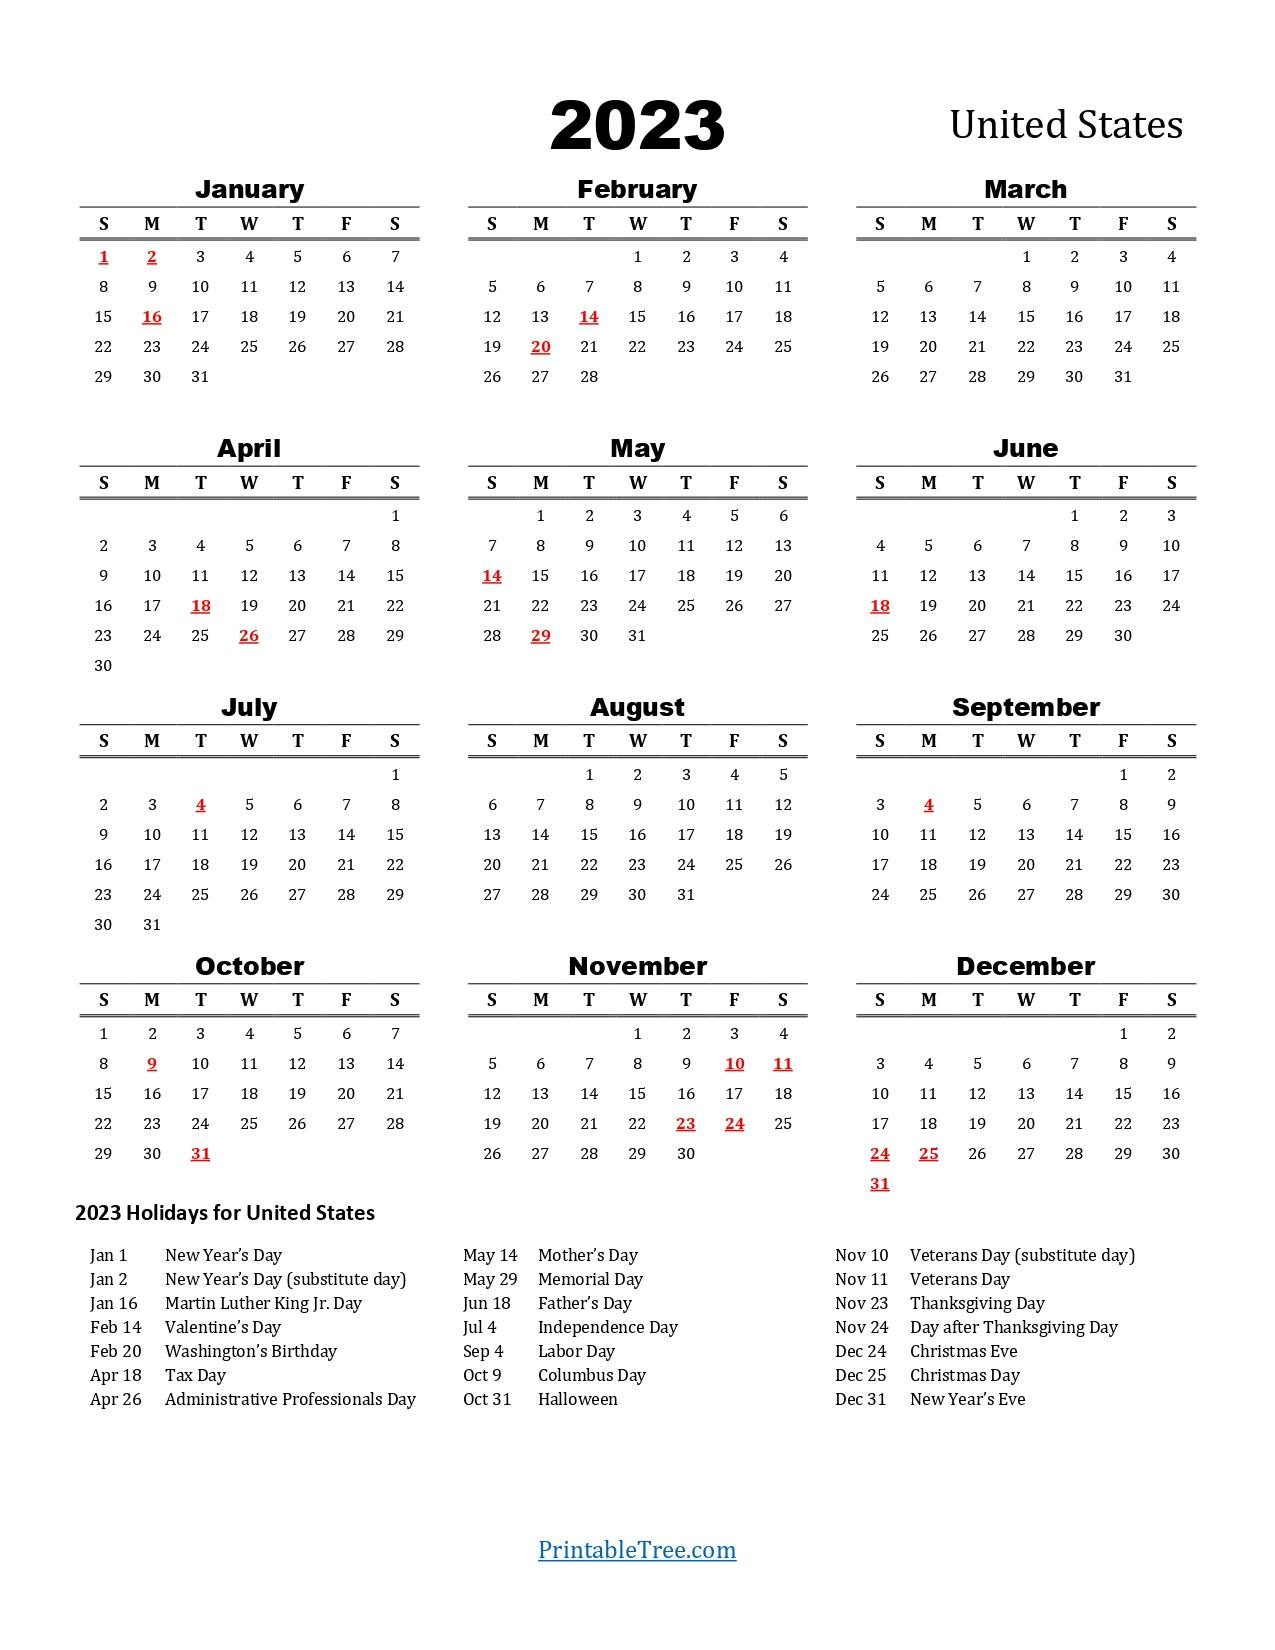 2023 Calendar Single Page With Holidays Portrait.jpg